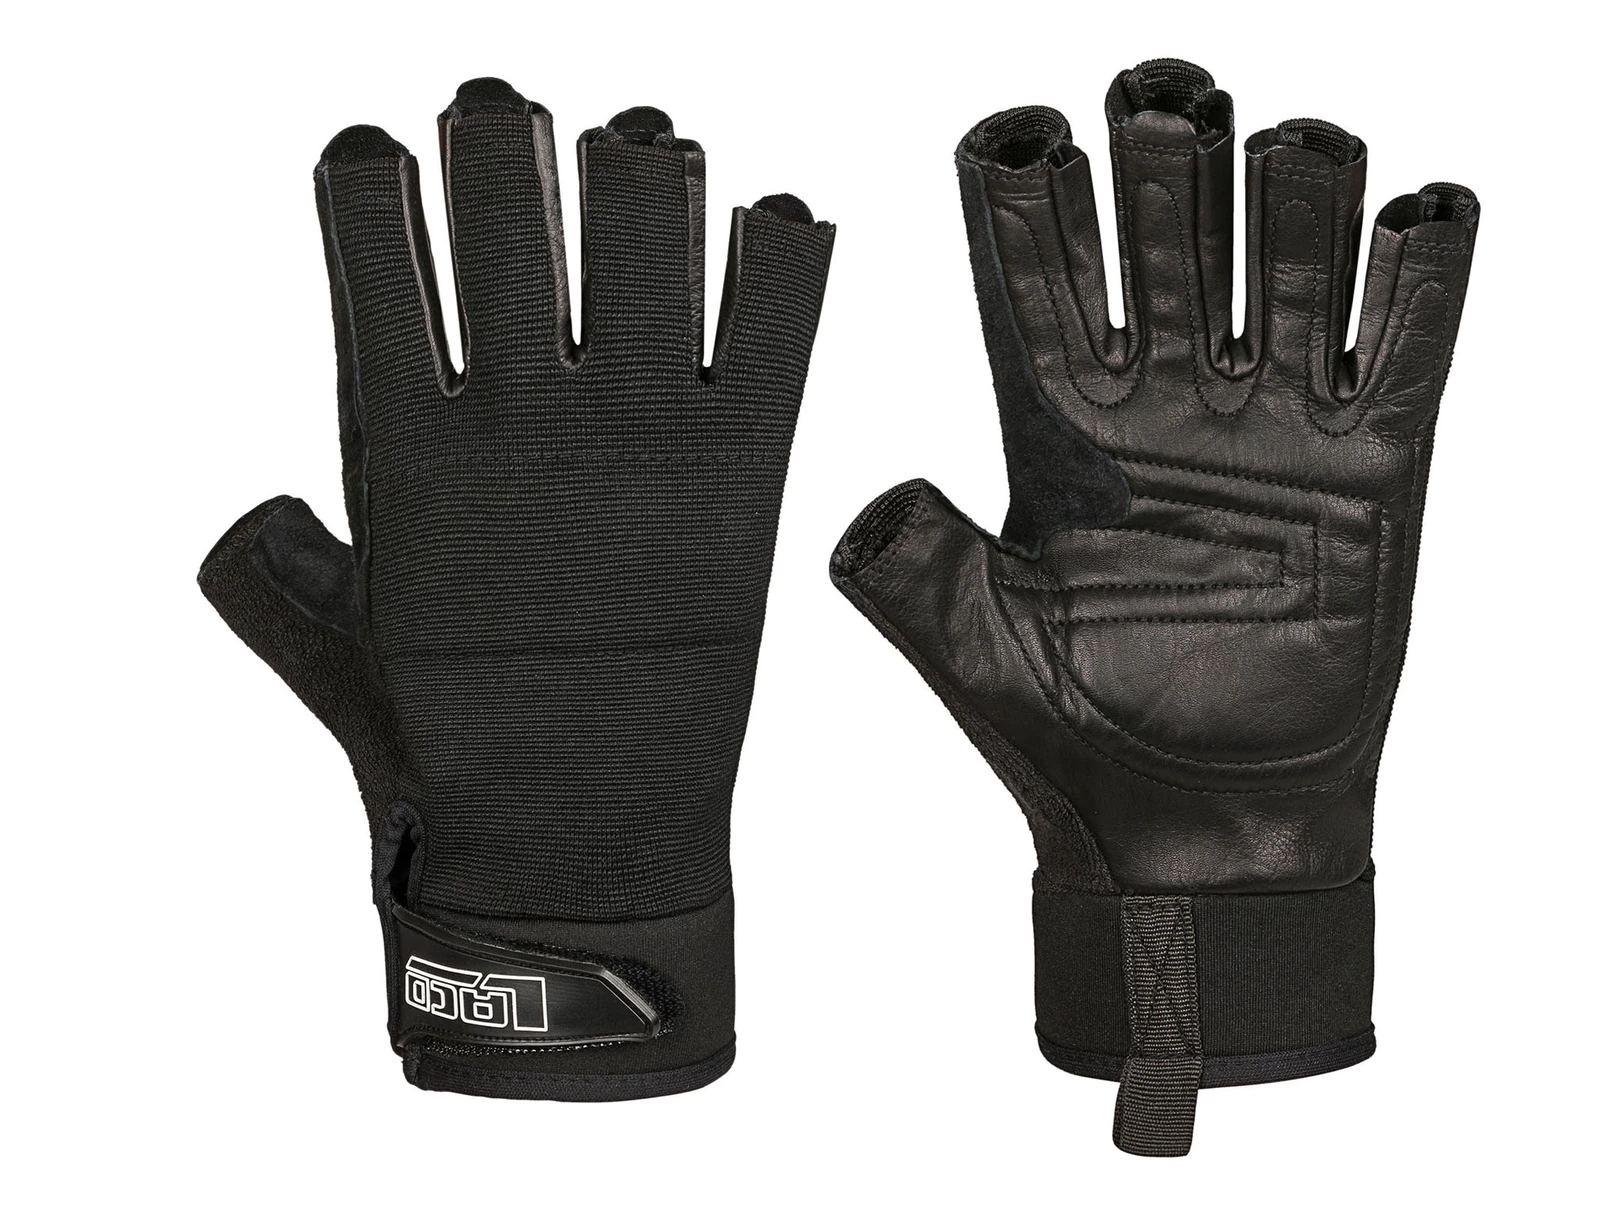 LACD Gloves 2.0 Heavy Duty Klettersteig-Handschuhe